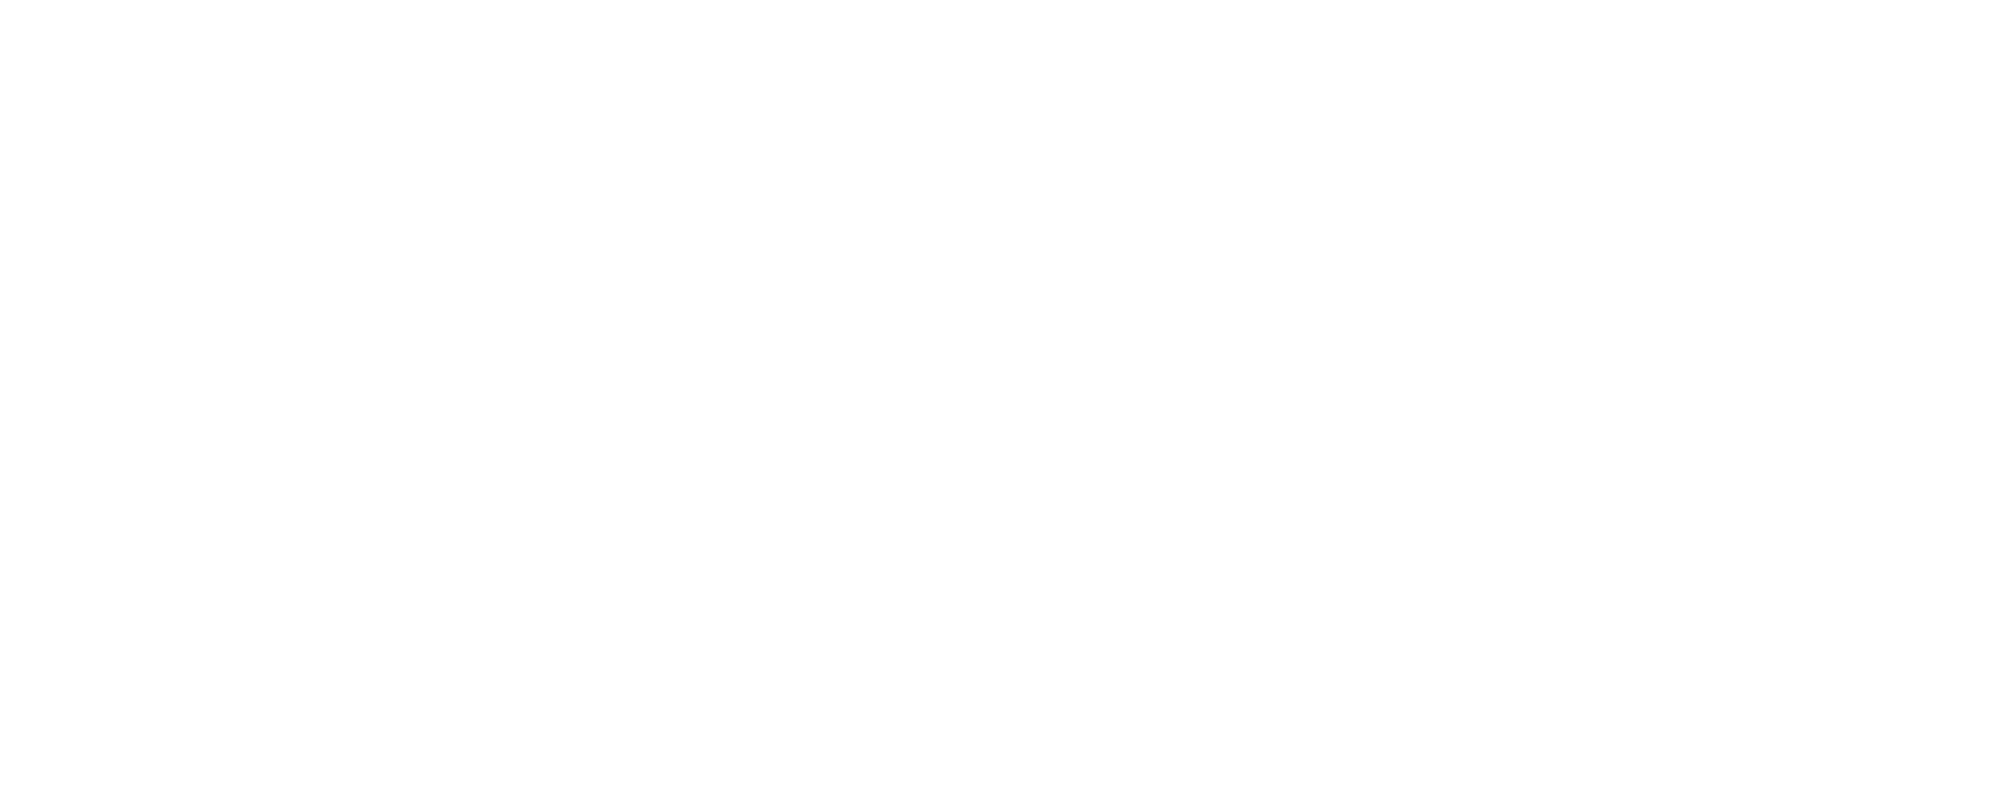 Eve Online Ascension Patch Notes - Eve Online (2000x798), Png Download